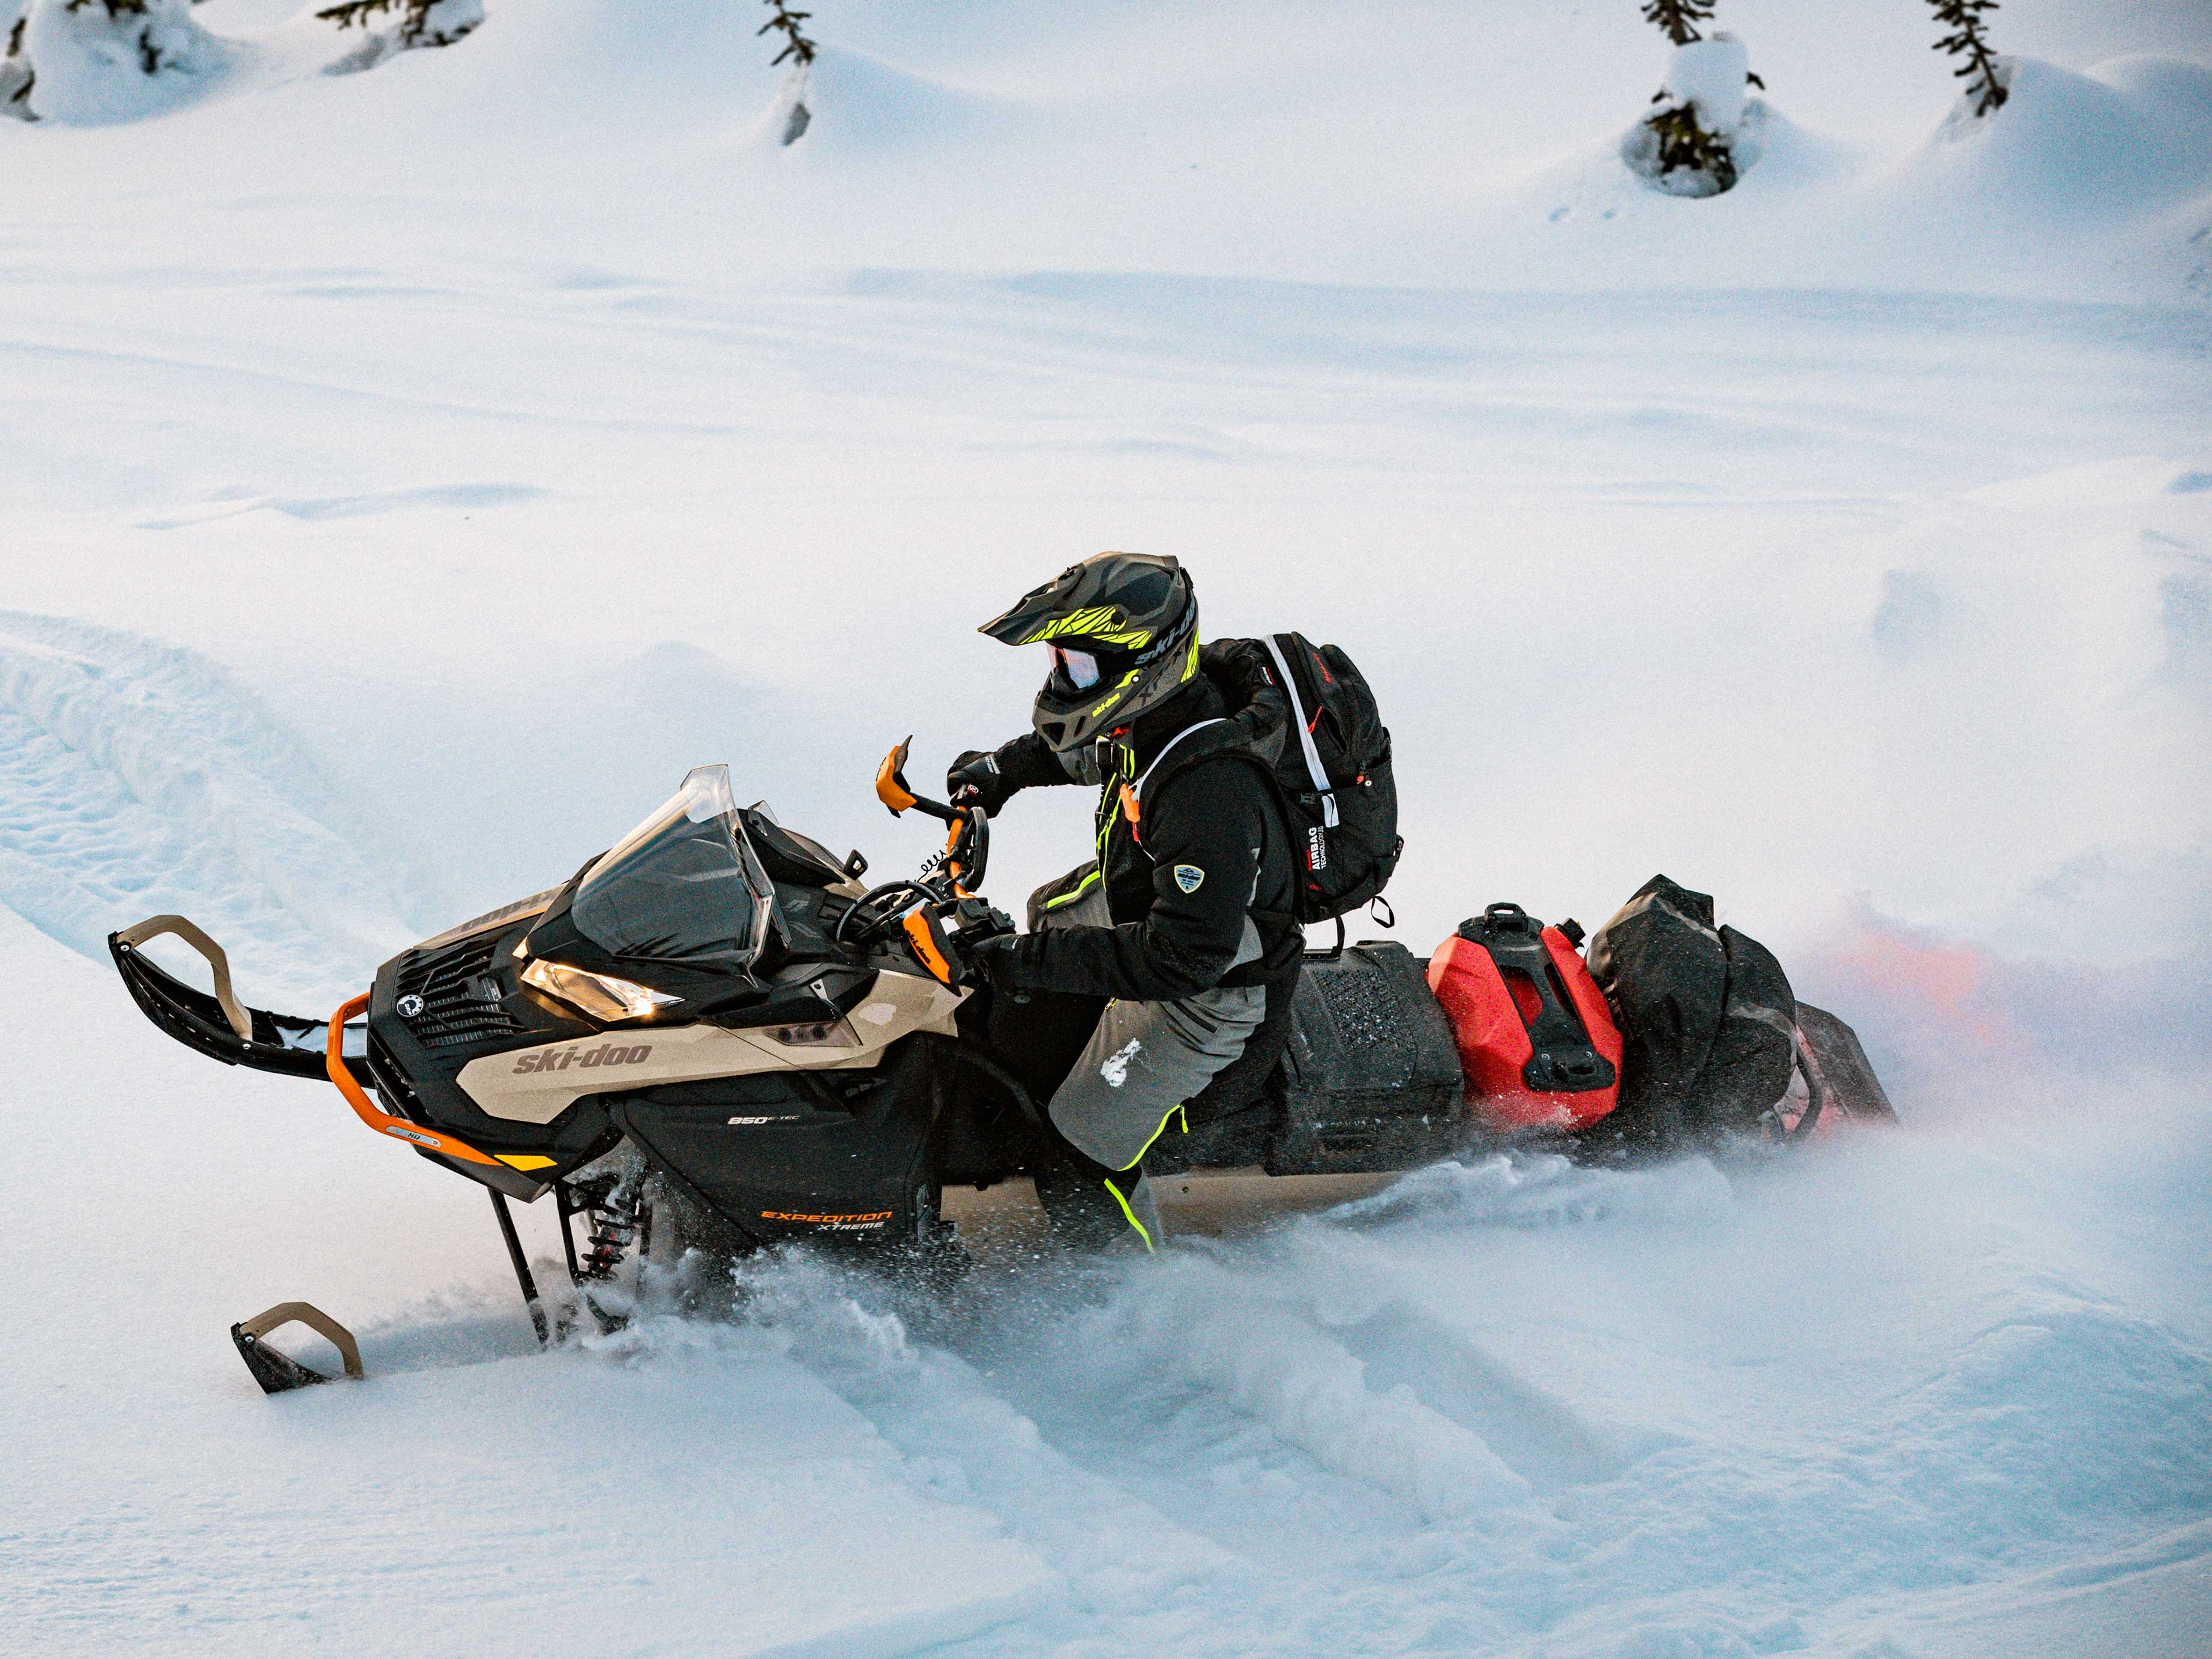 Rider on a Ski-Doo Expedition